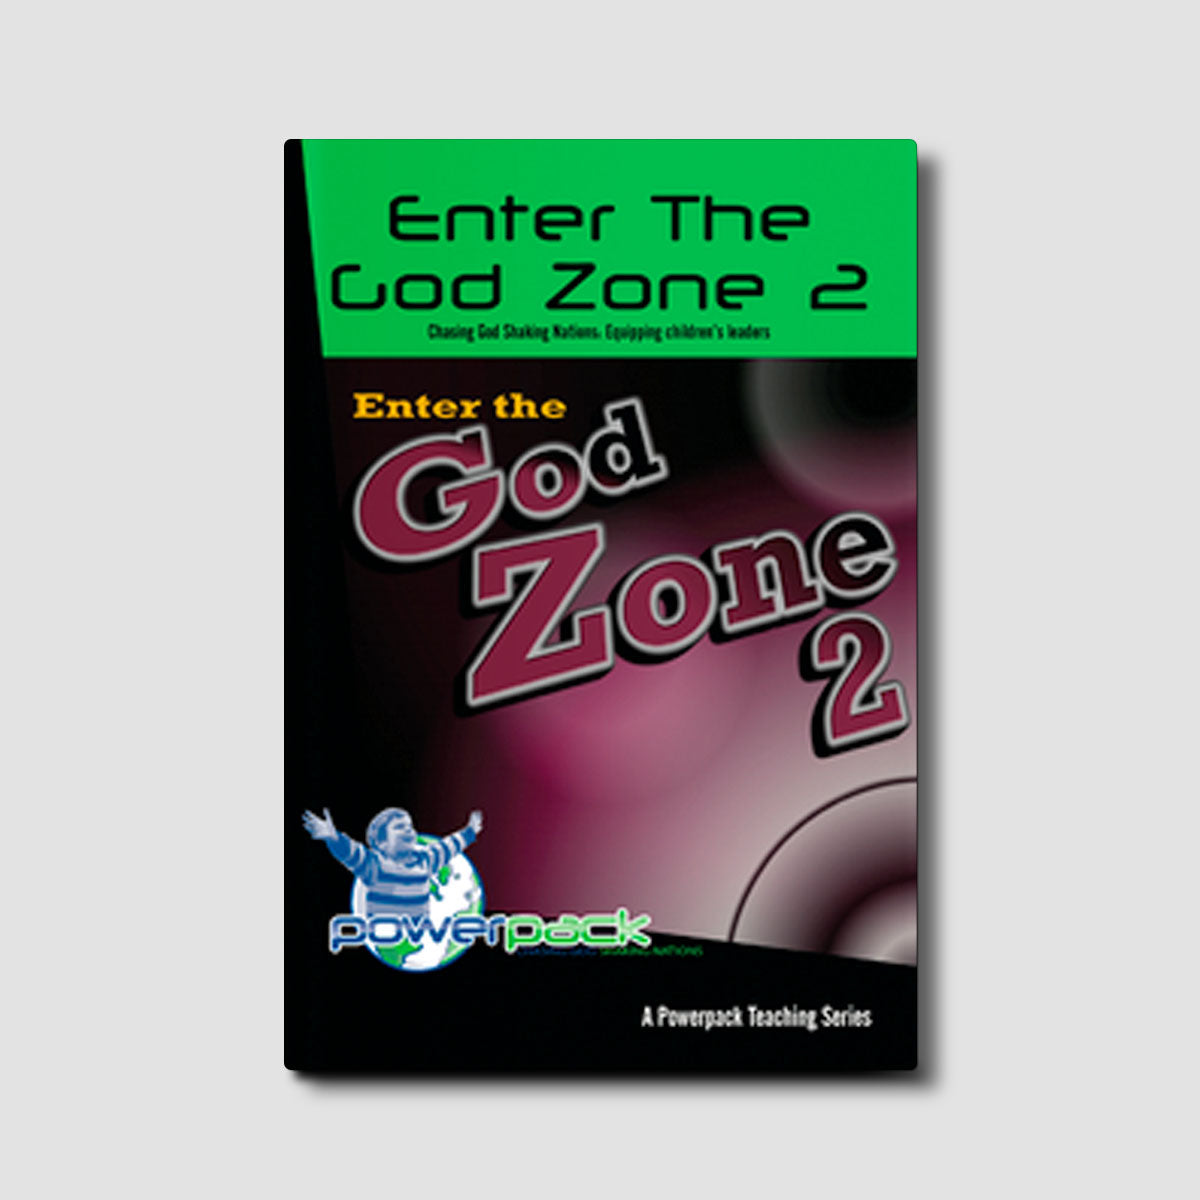 Enter the God Zone 2